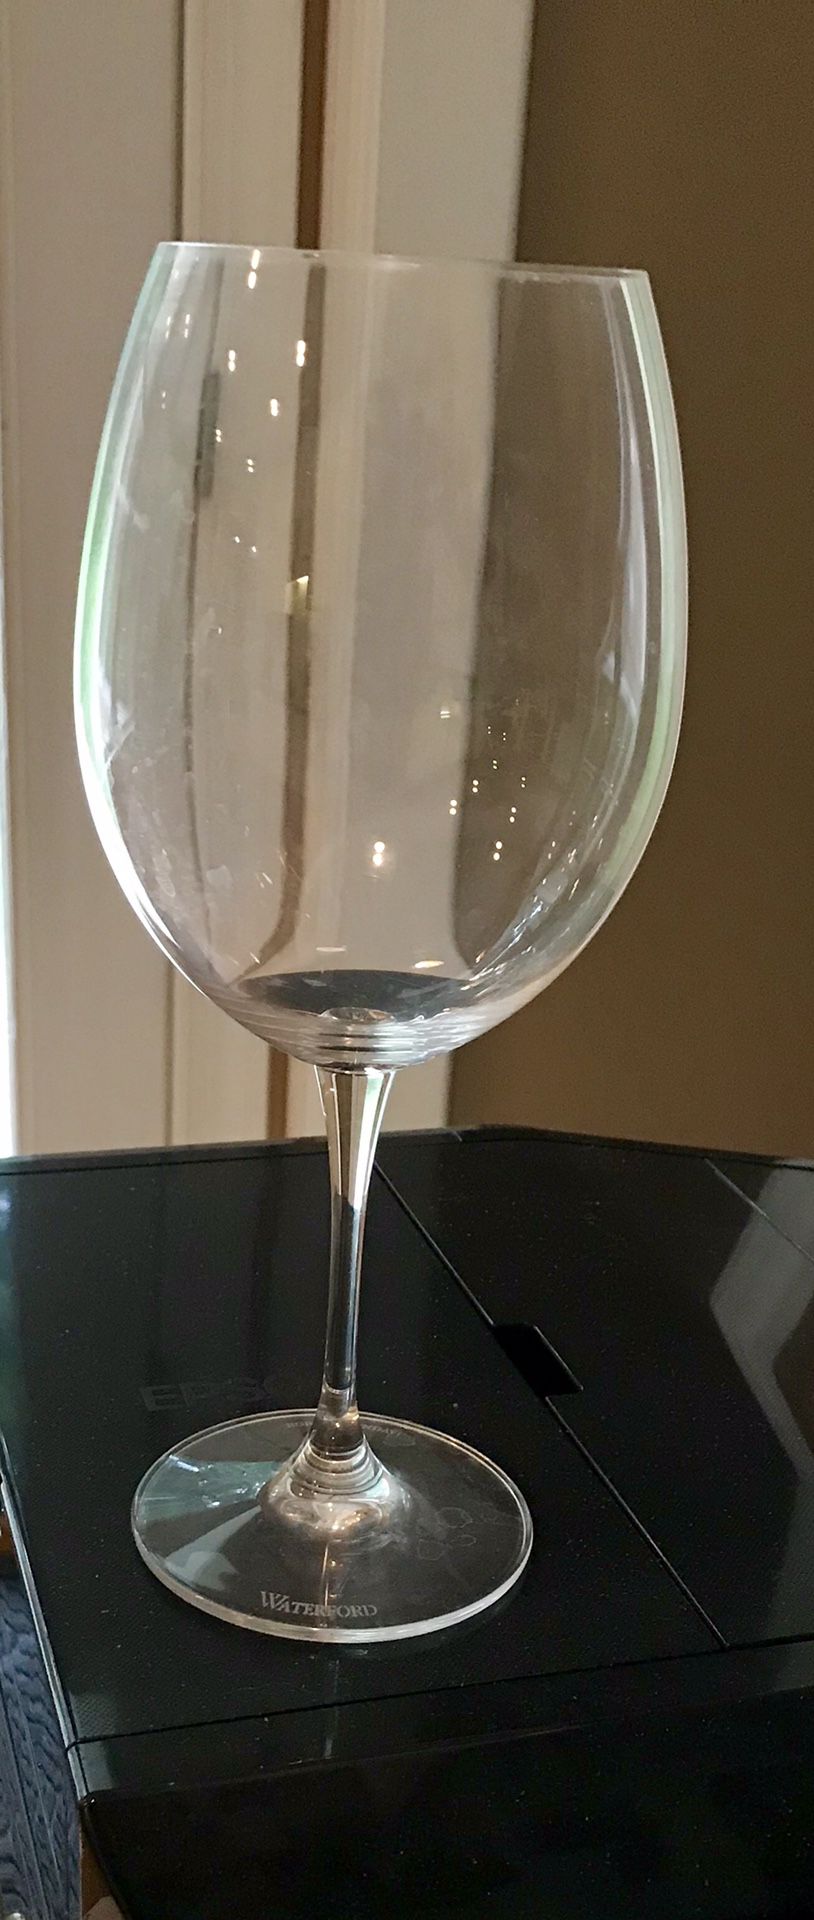 Waterford Crystal Robert Mondavi wine glasses